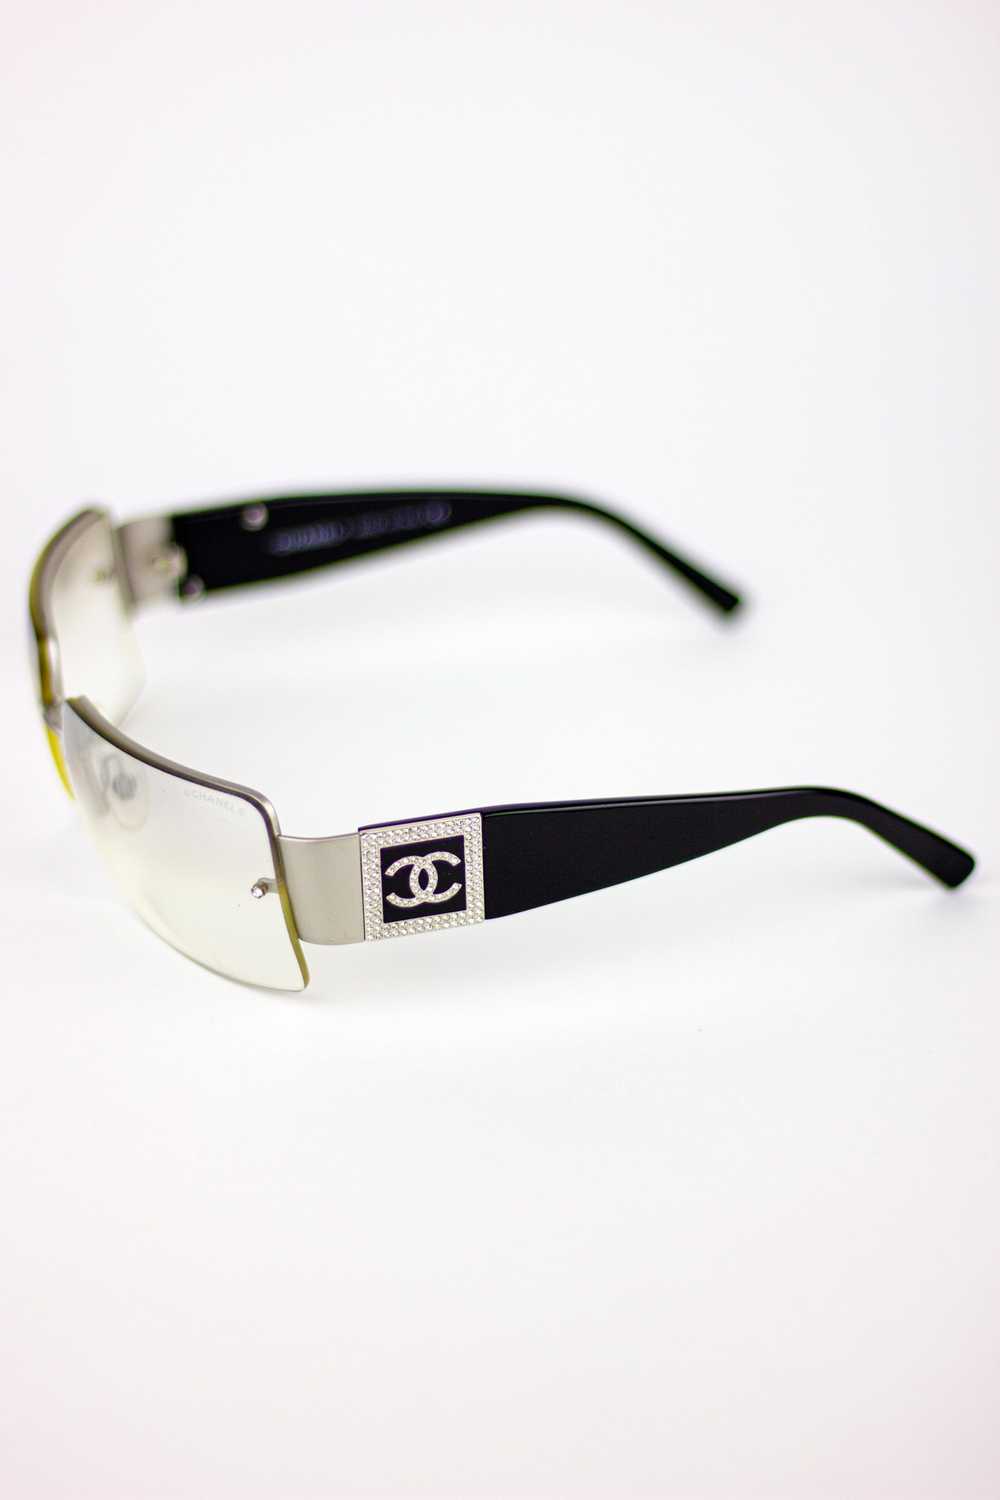 Chanel Chanel CC Logo Rhinestone Clear Sunglasses - image 3